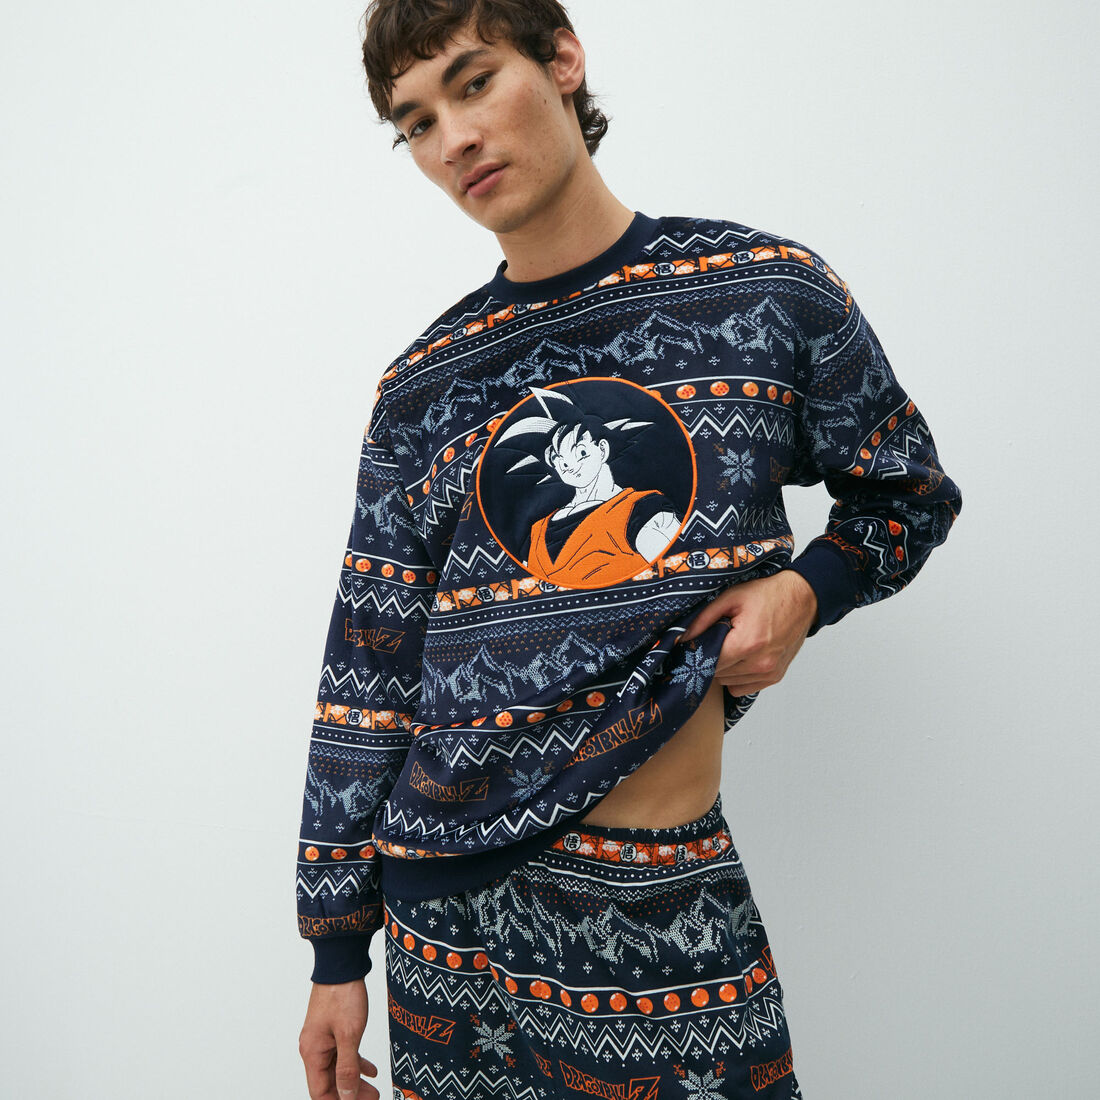 velvet sweatshirt with dragon ball z jacquard print;